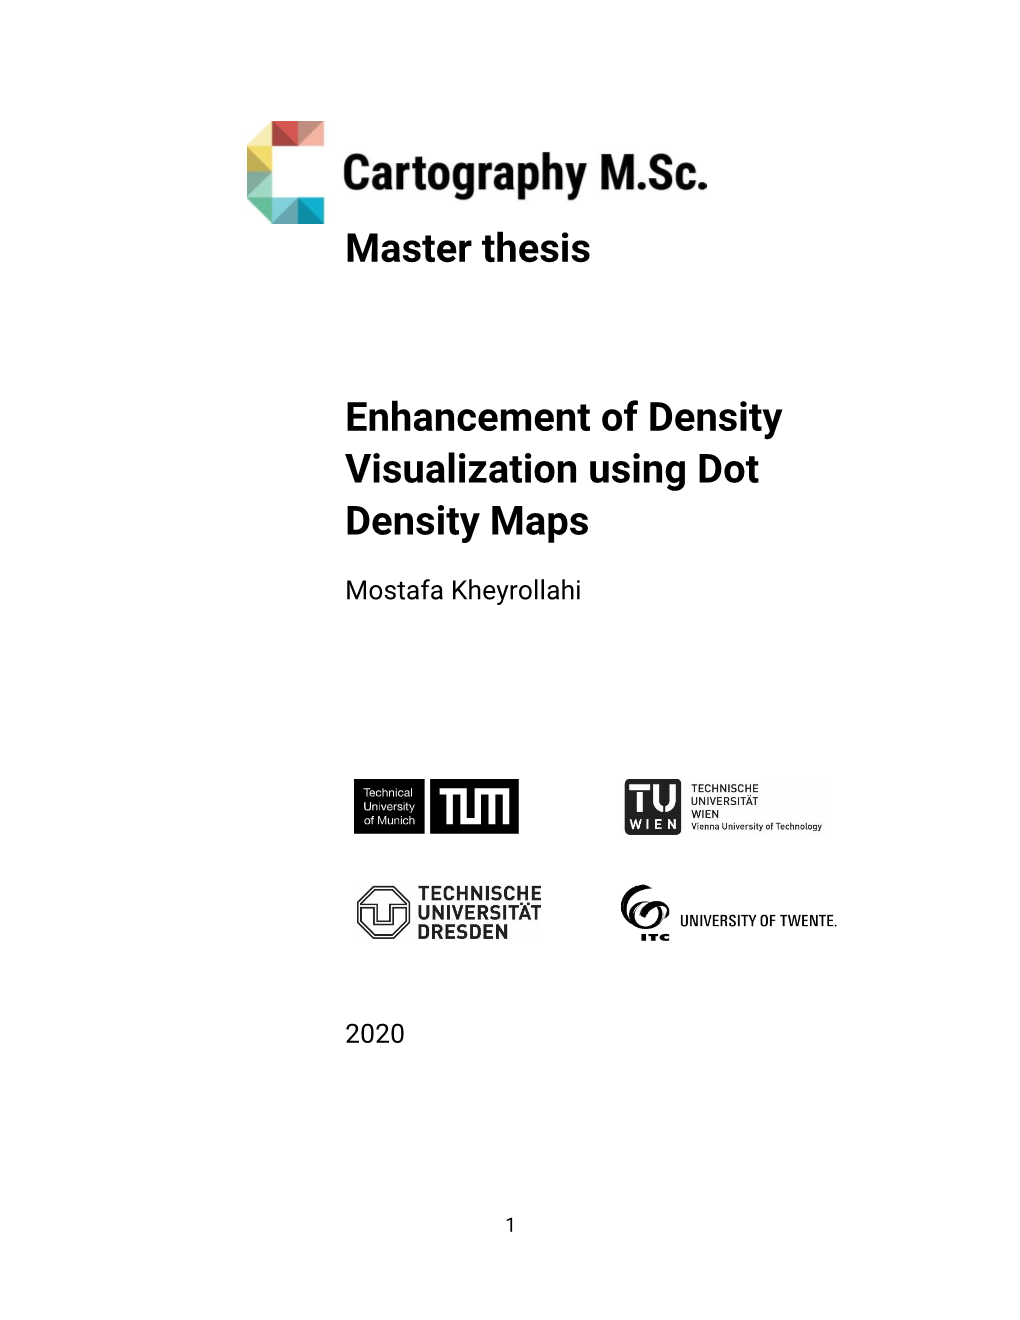 Master Thesis Enhancement of Density Visualization Using Dot Density Maps